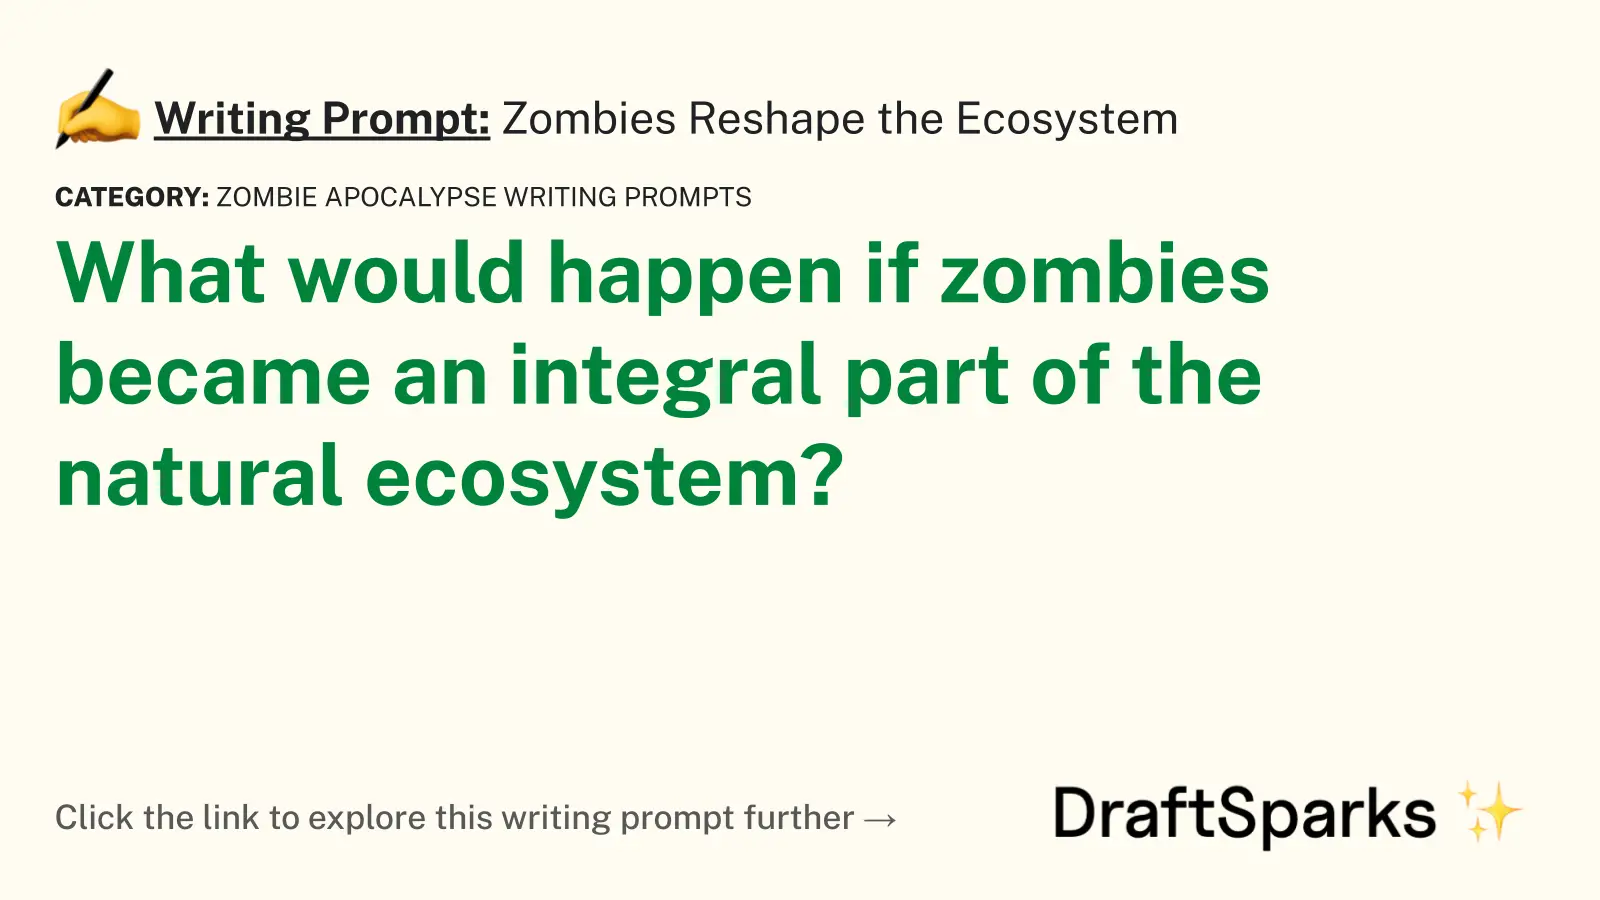 Zombies Reshape the Ecosystem